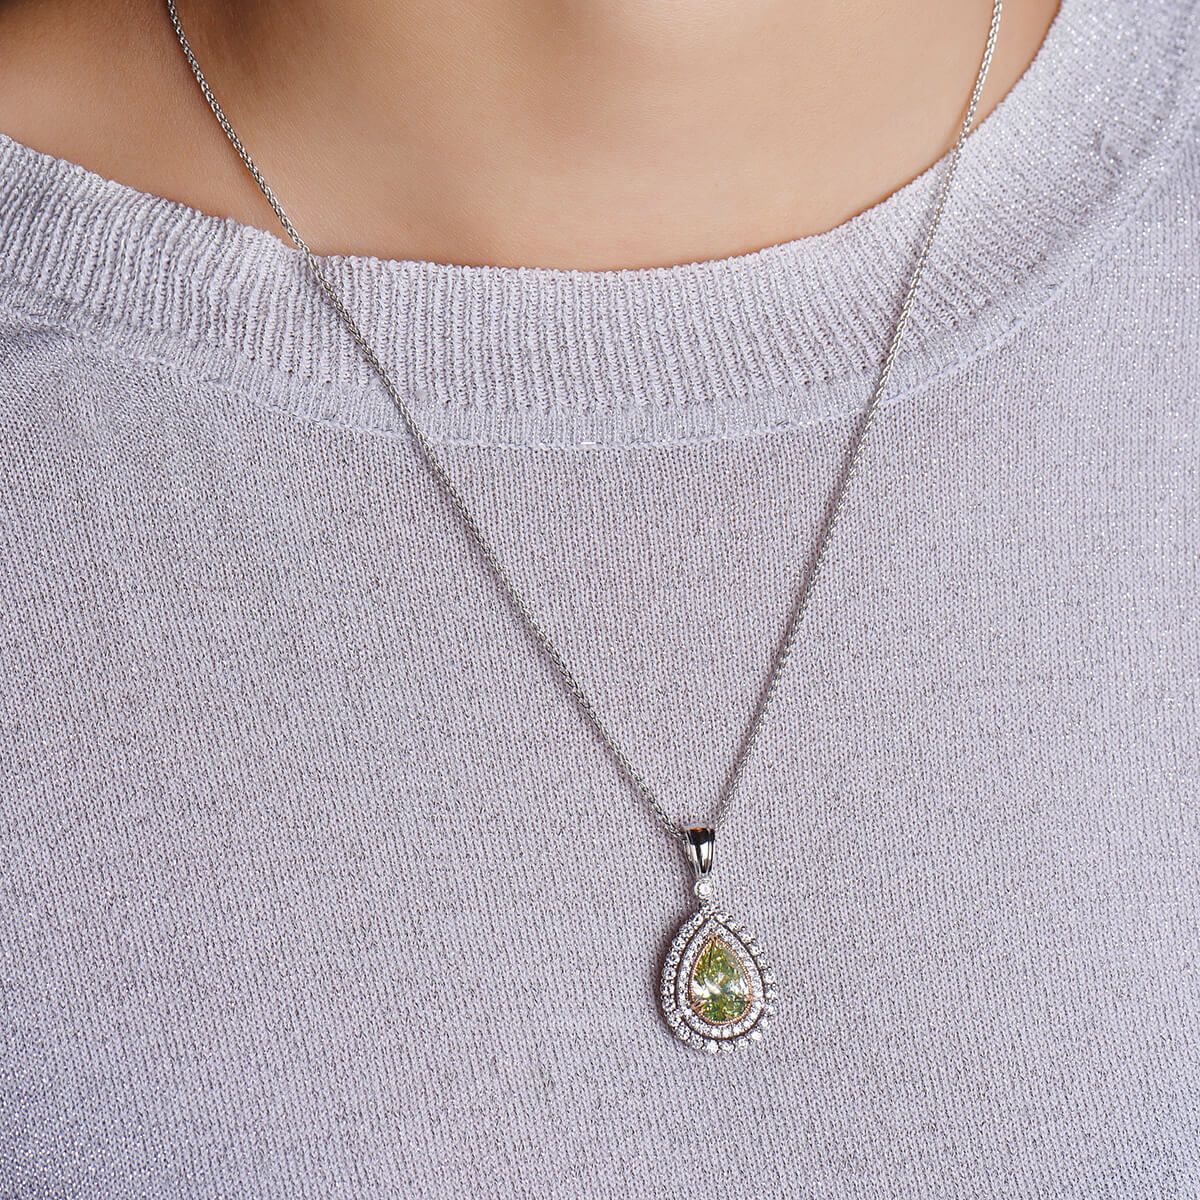 Fancy Grayish Greenish Yellow Diamond Necklace, 3.21 Carat, Pear shape, GIA Certified, 6157656686